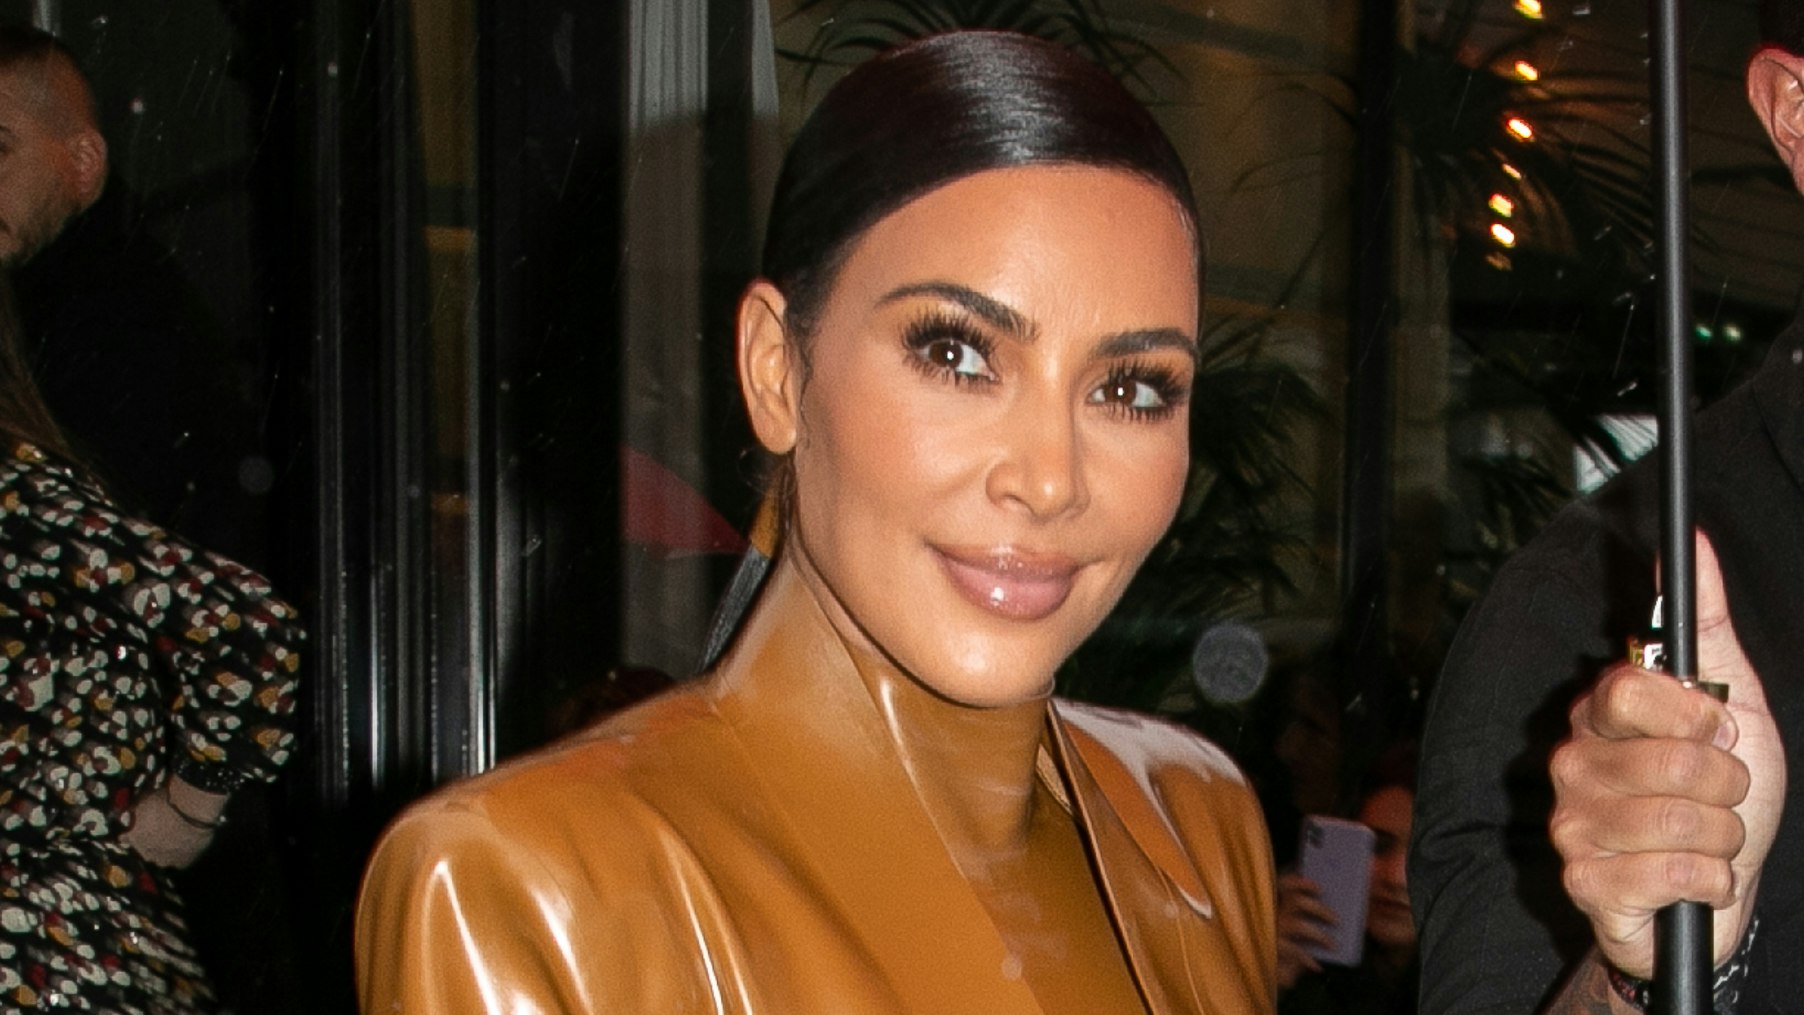 Bittersweet after an amazing 12 years': Kim Kardashian confirms